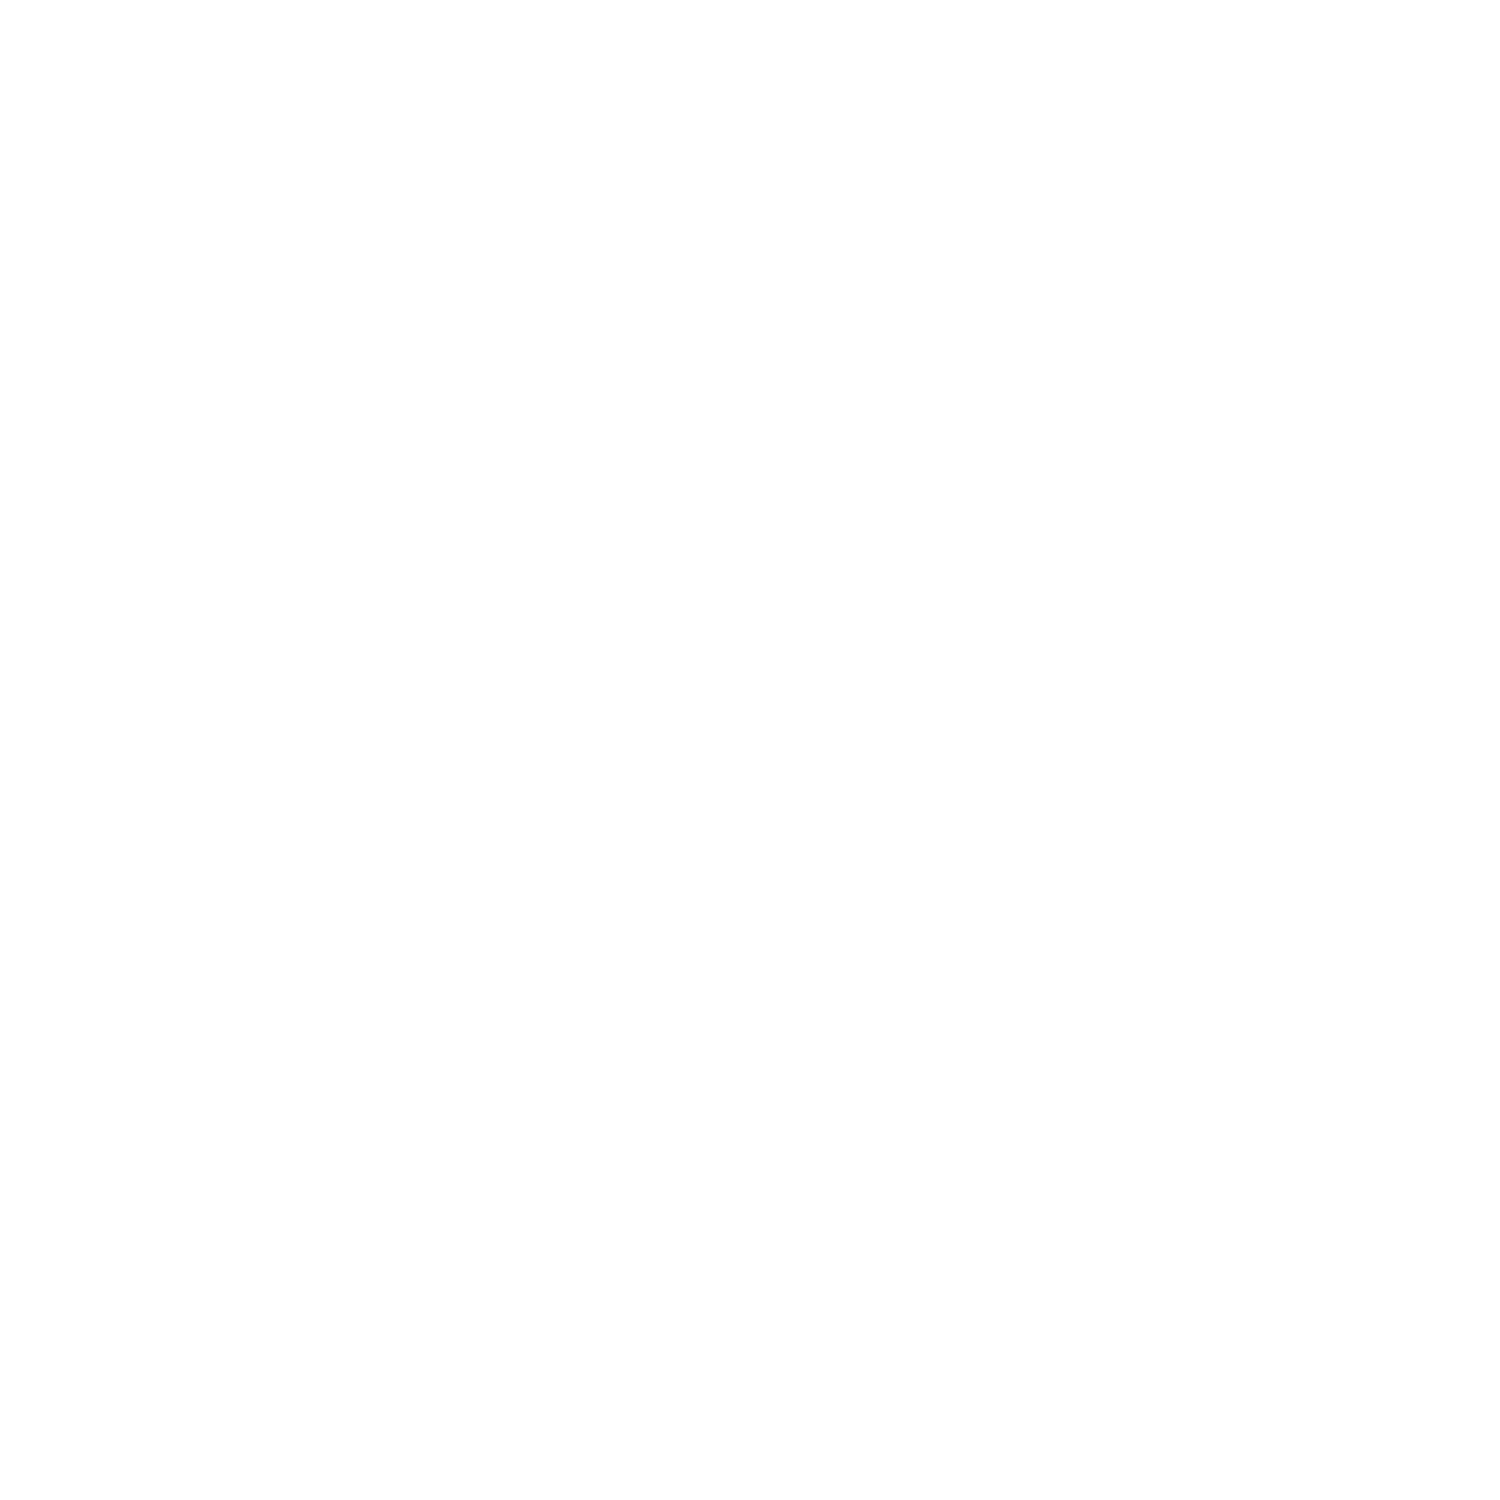 Home - Allstar Music Empire